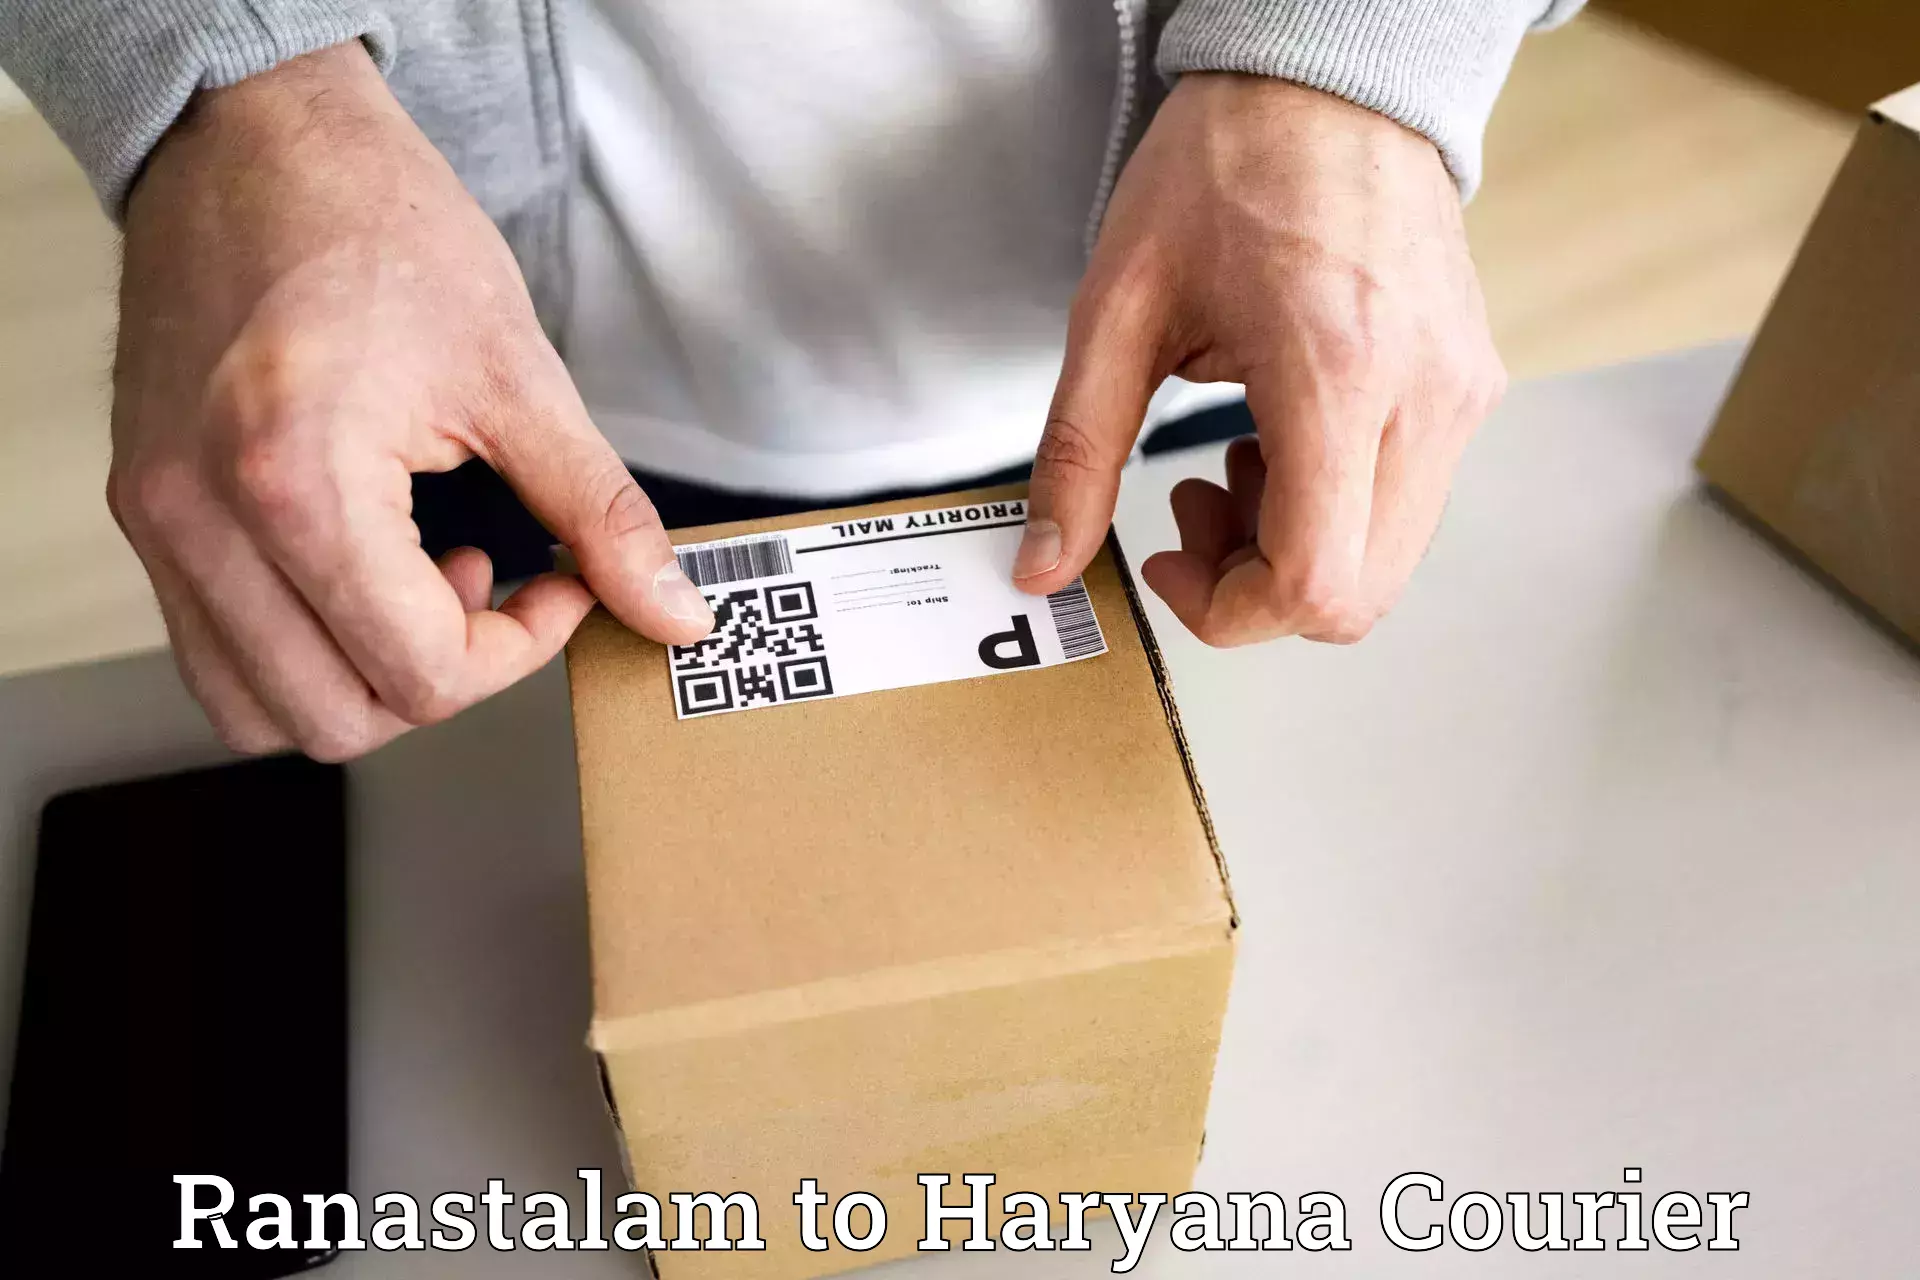 Courier service comparison Ranastalam to Bahal